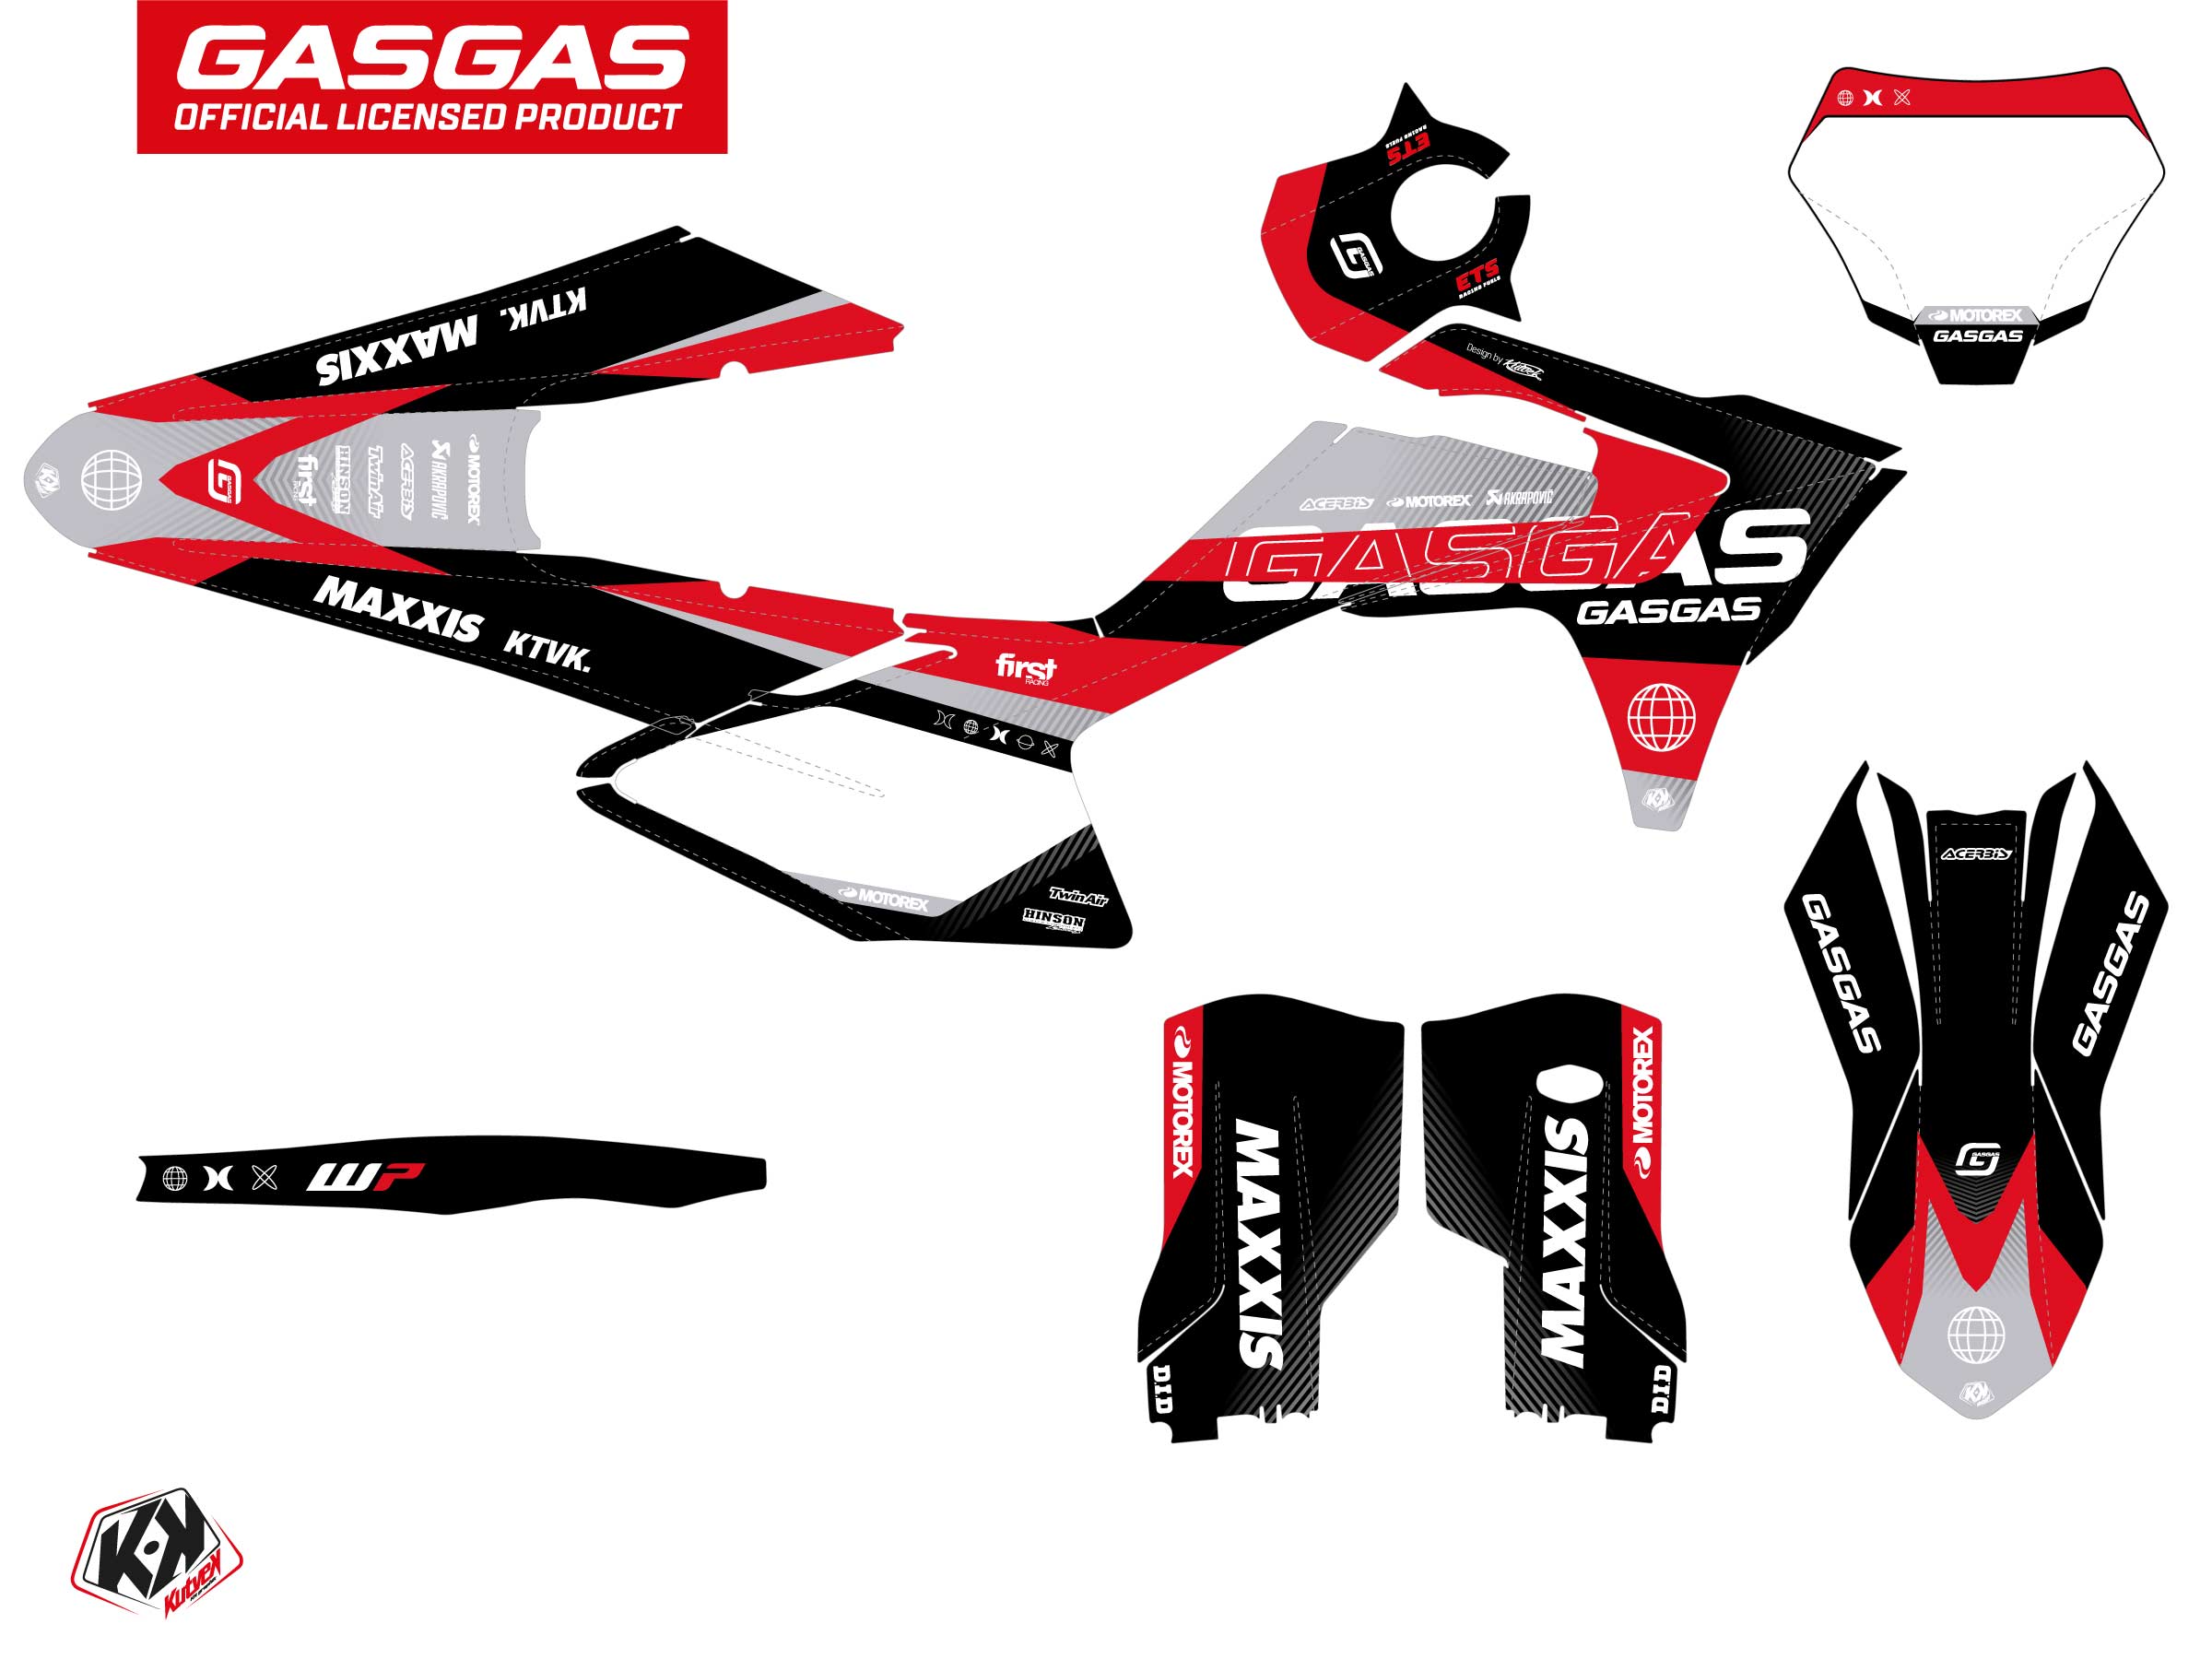 Kit Déco Motocross Kanyon Gasgas Mc 450 F Noir